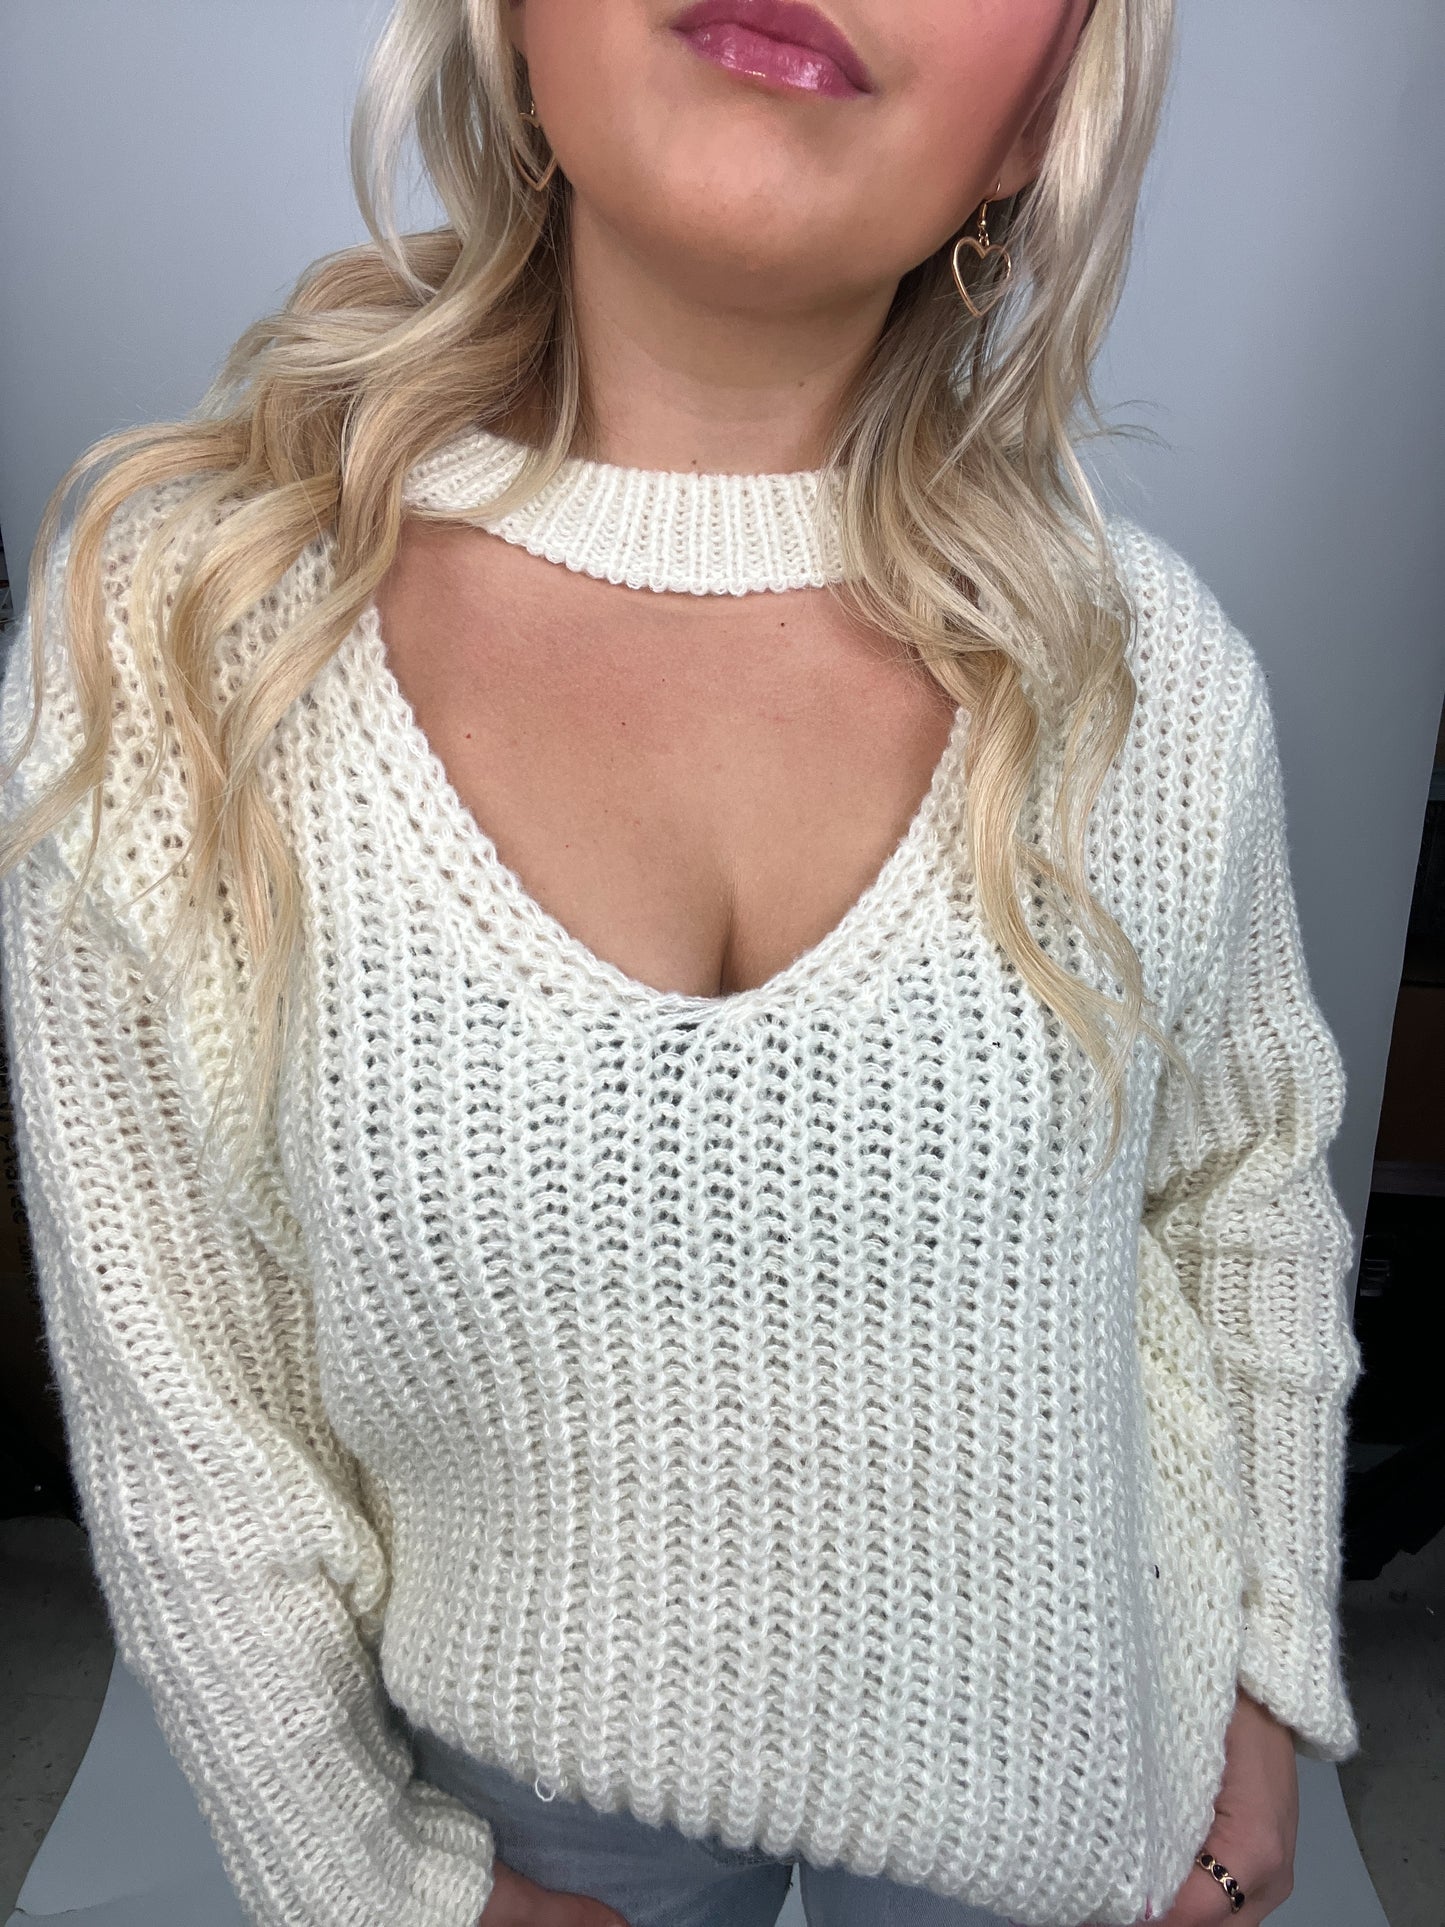 Belle White Sweater